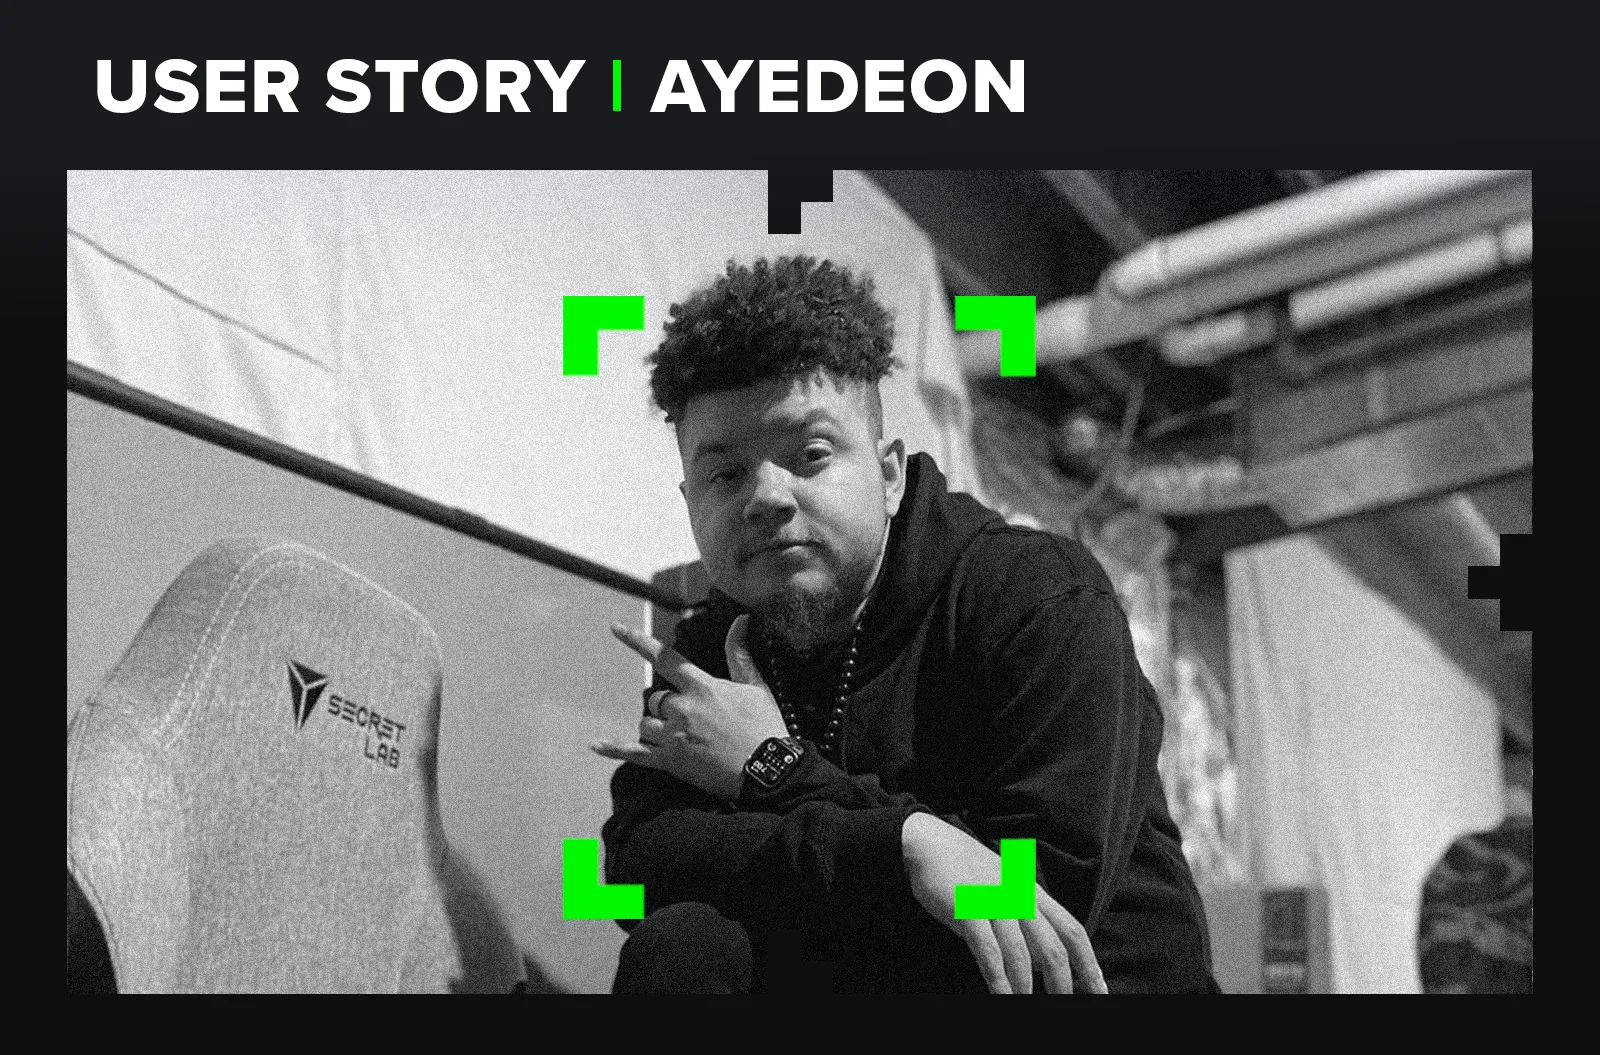 AyeDeon - User Story